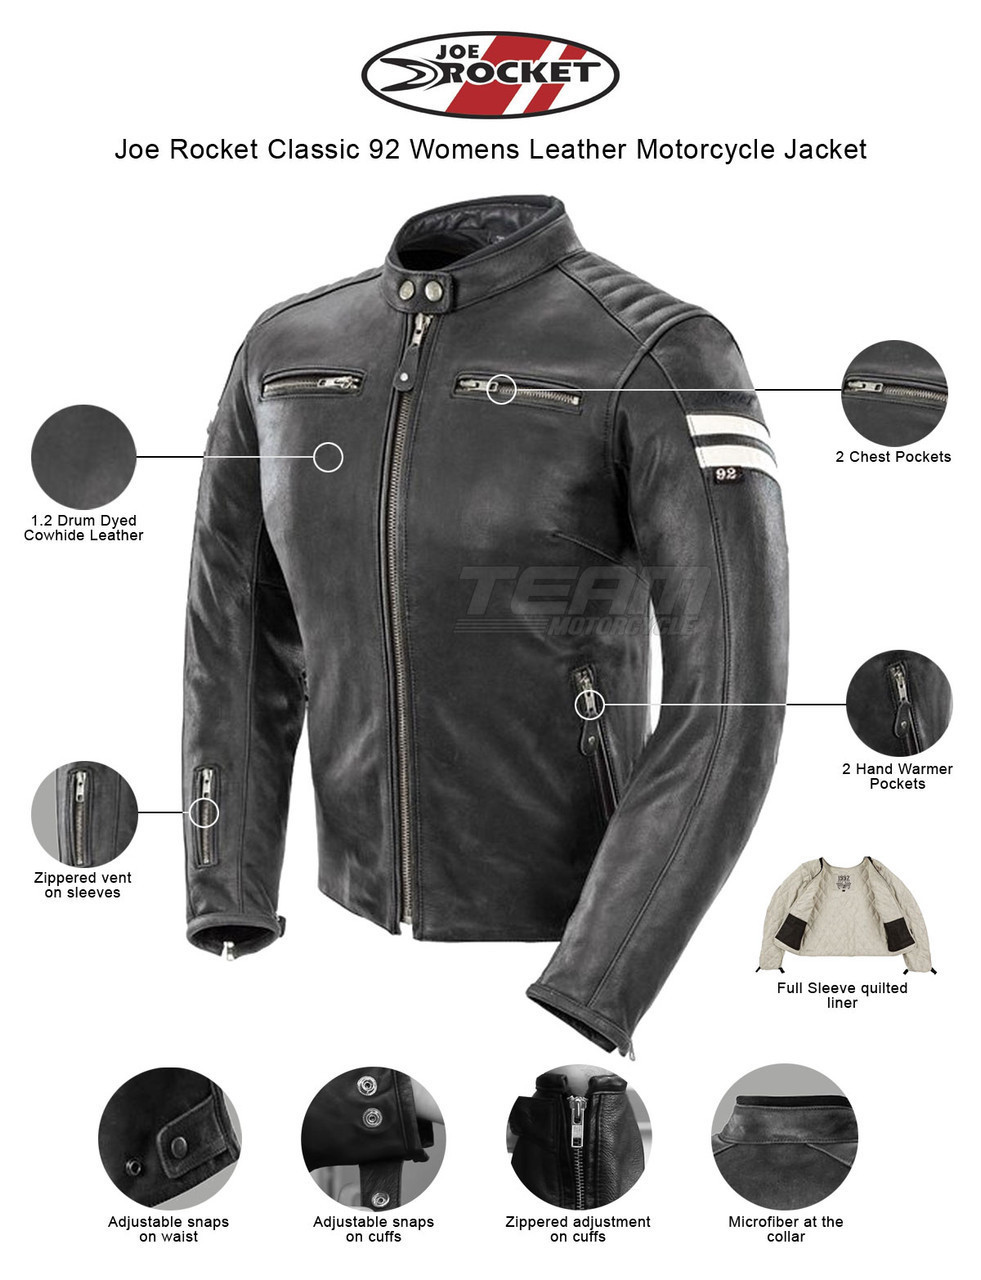 Gear: Joe Rocket Classic '92 Leather Motorcycle Jacket - Review